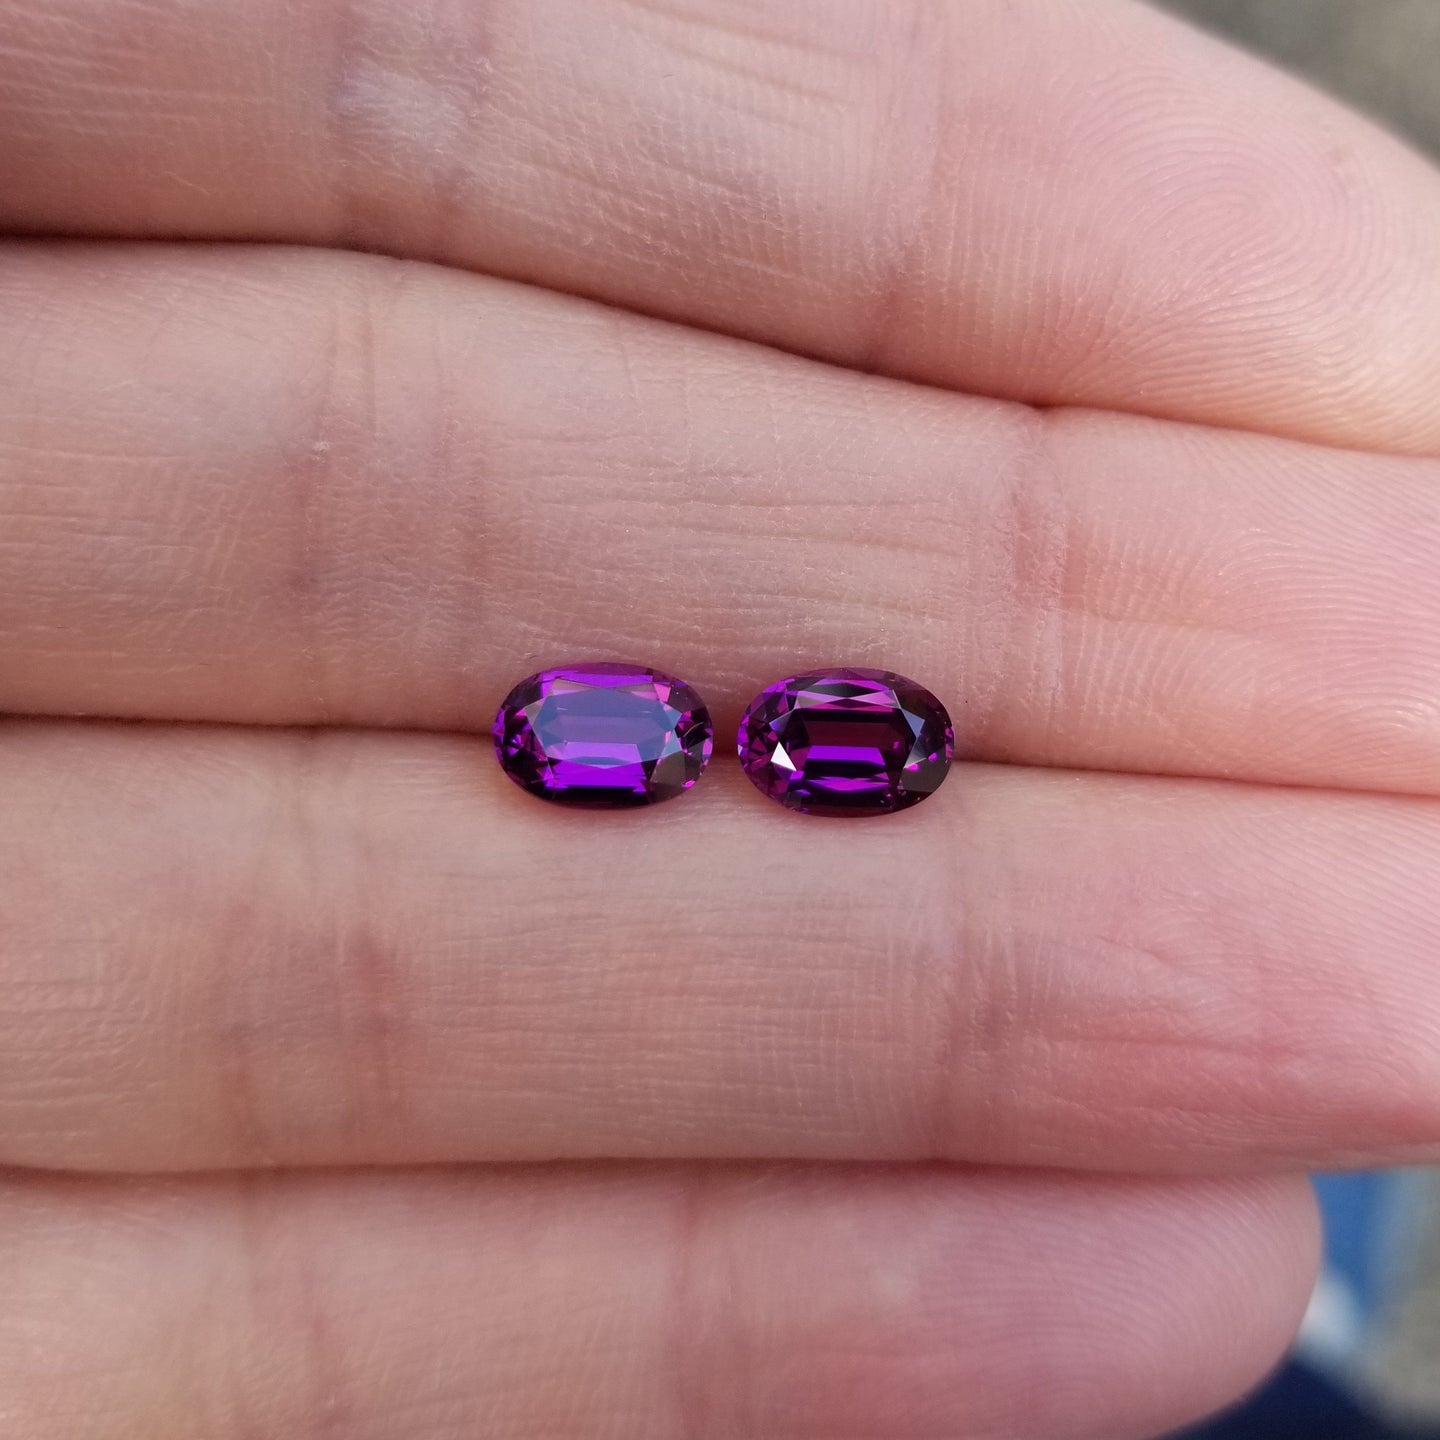 3.08ctw Purple Garnet Matched Pair